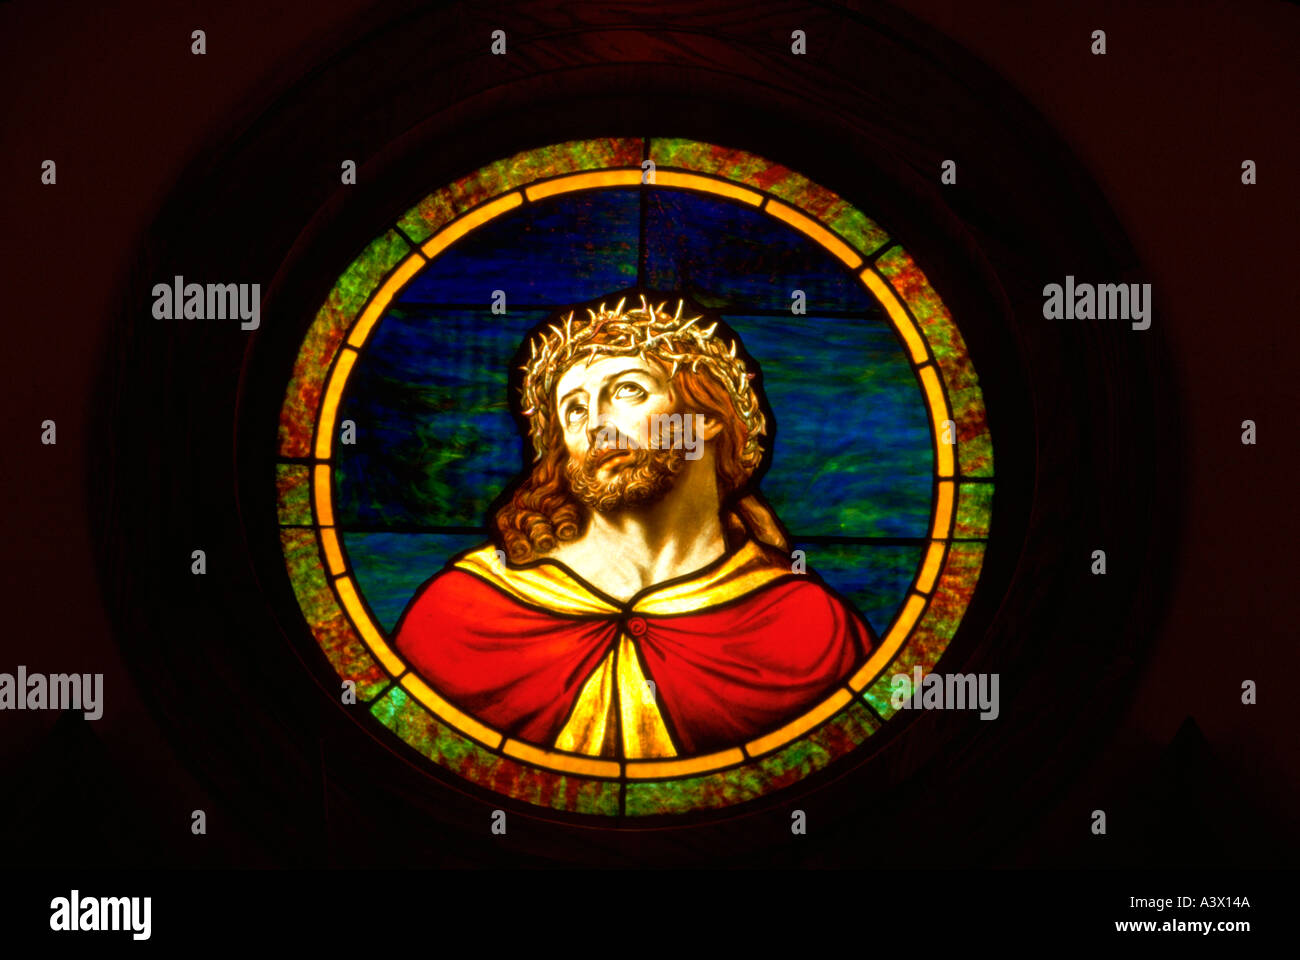 Jesus wearing crown of thorns on stained glass window. Minneapolis Minnesota USA Stock Photo